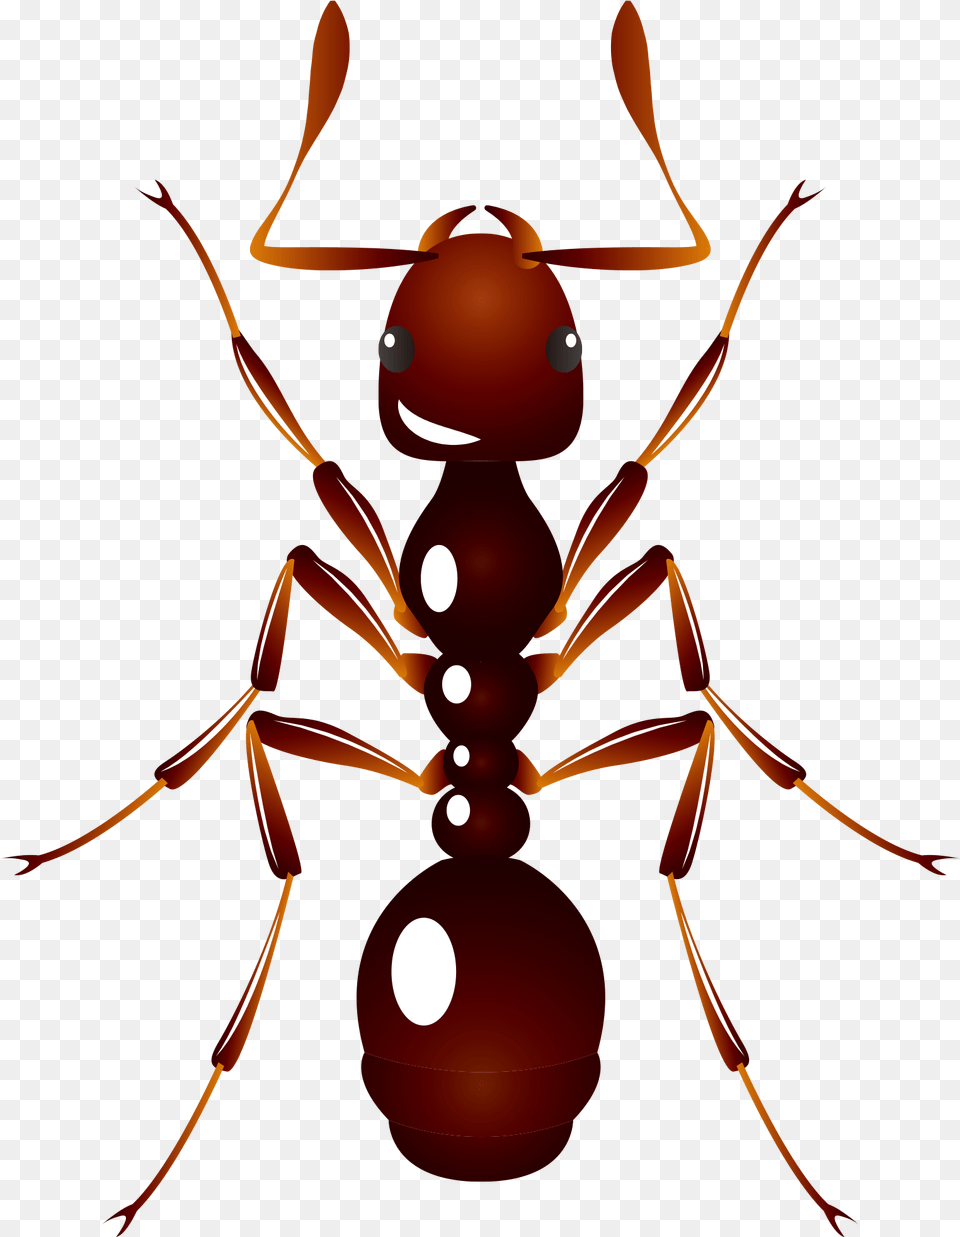 Ant U6606u866b U8682u8681 Insect Ant, Animal, Invertebrate, Chandelier, Lamp Free Transparent Png